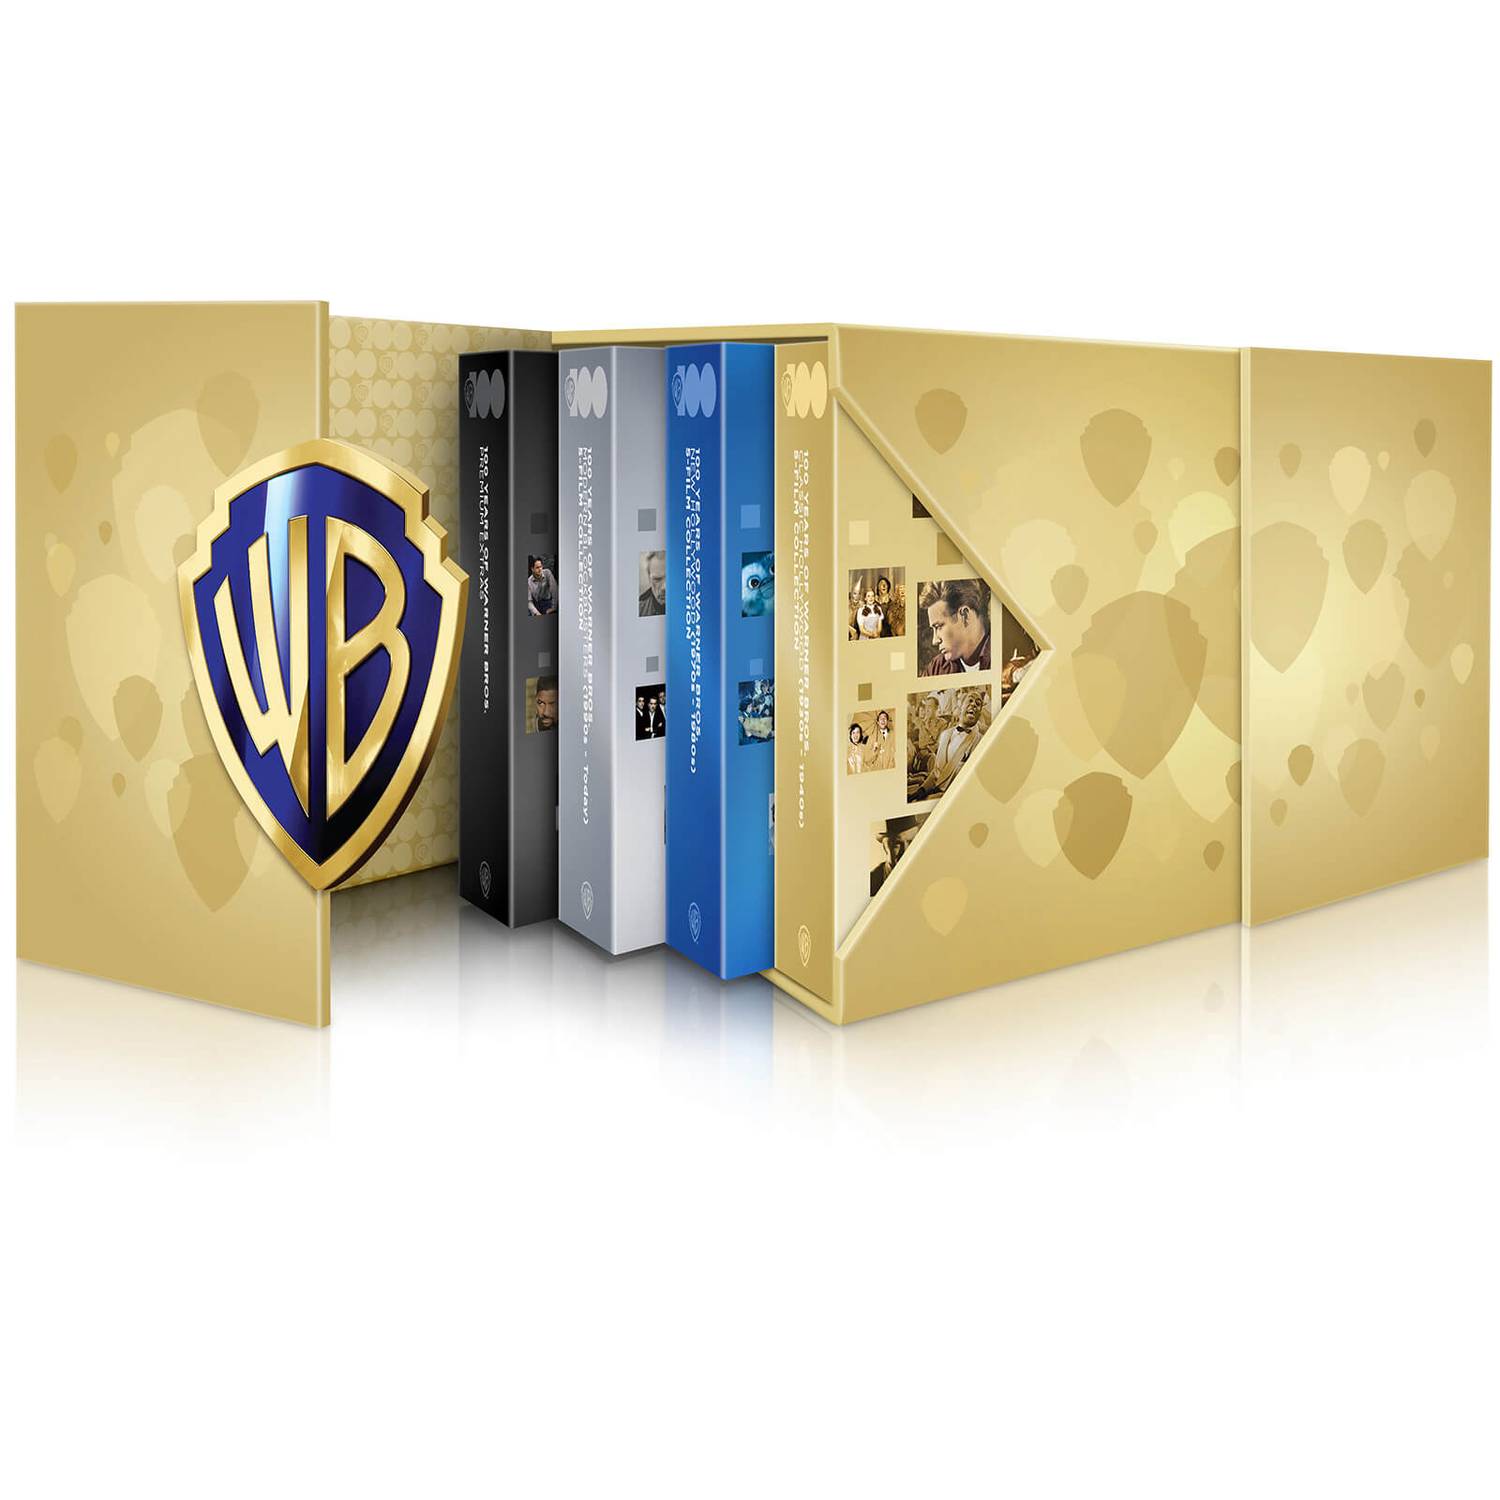 100 Years of Warner Bros. - Коллекция 30-ти легендарных фильмов (1939-2022) (4K UHD + Blu-ray)